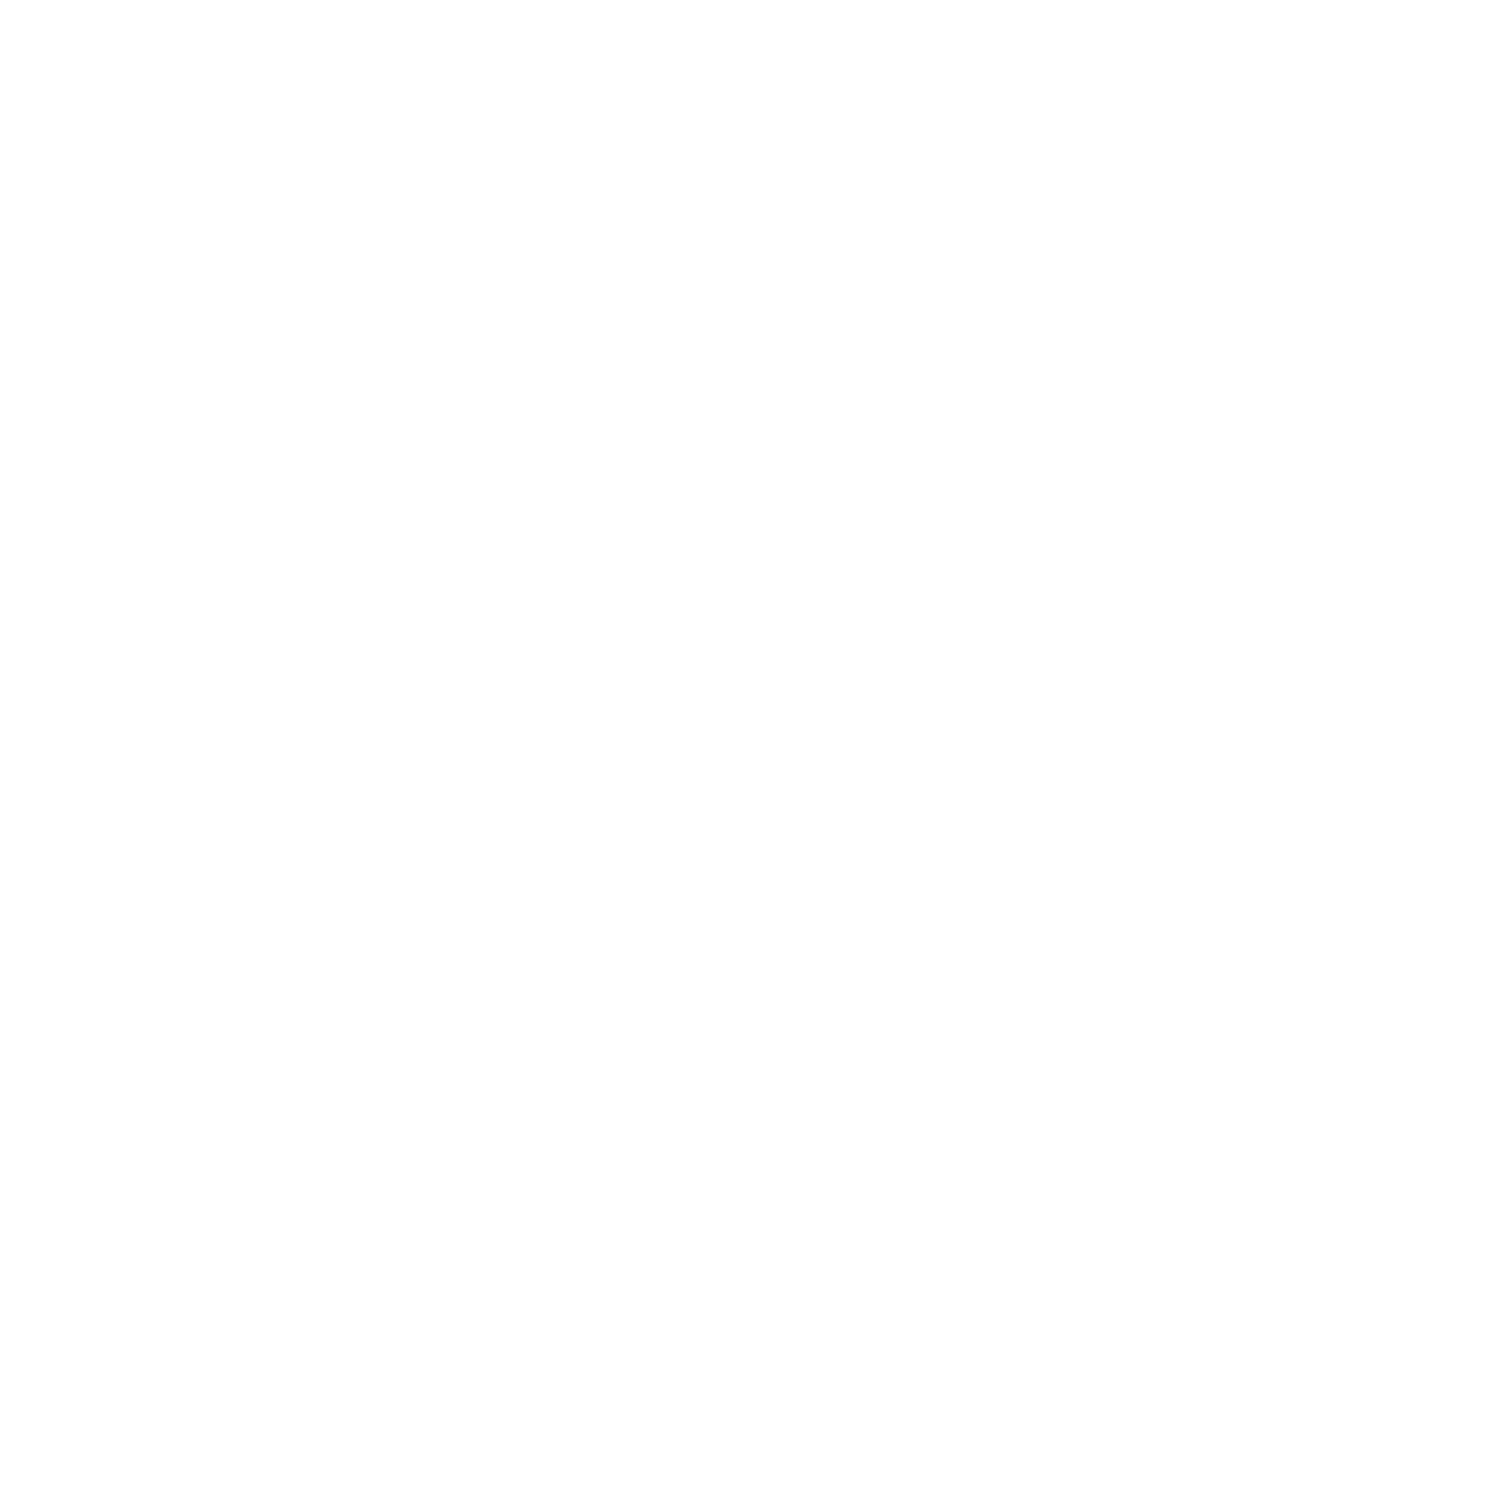 Caan Rose Estates Ltd - Slough : Letting agents in Maidenhead Berkshire